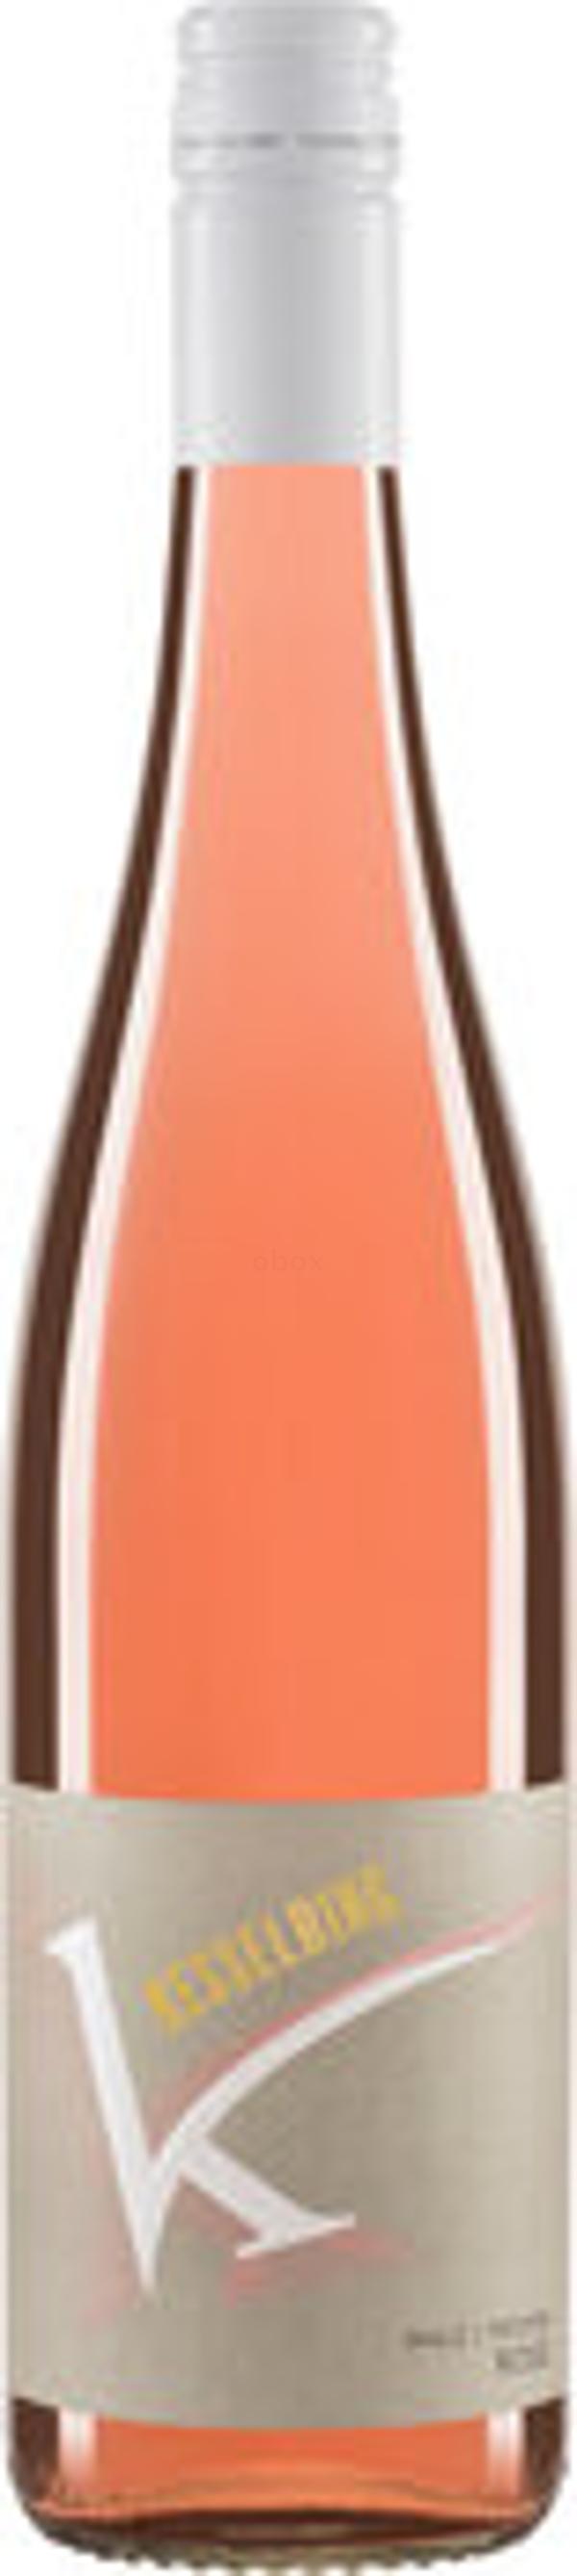 Produktfoto zu Pfälzer Rosé QW Pfalz Kesselring, trocken - 0,75l